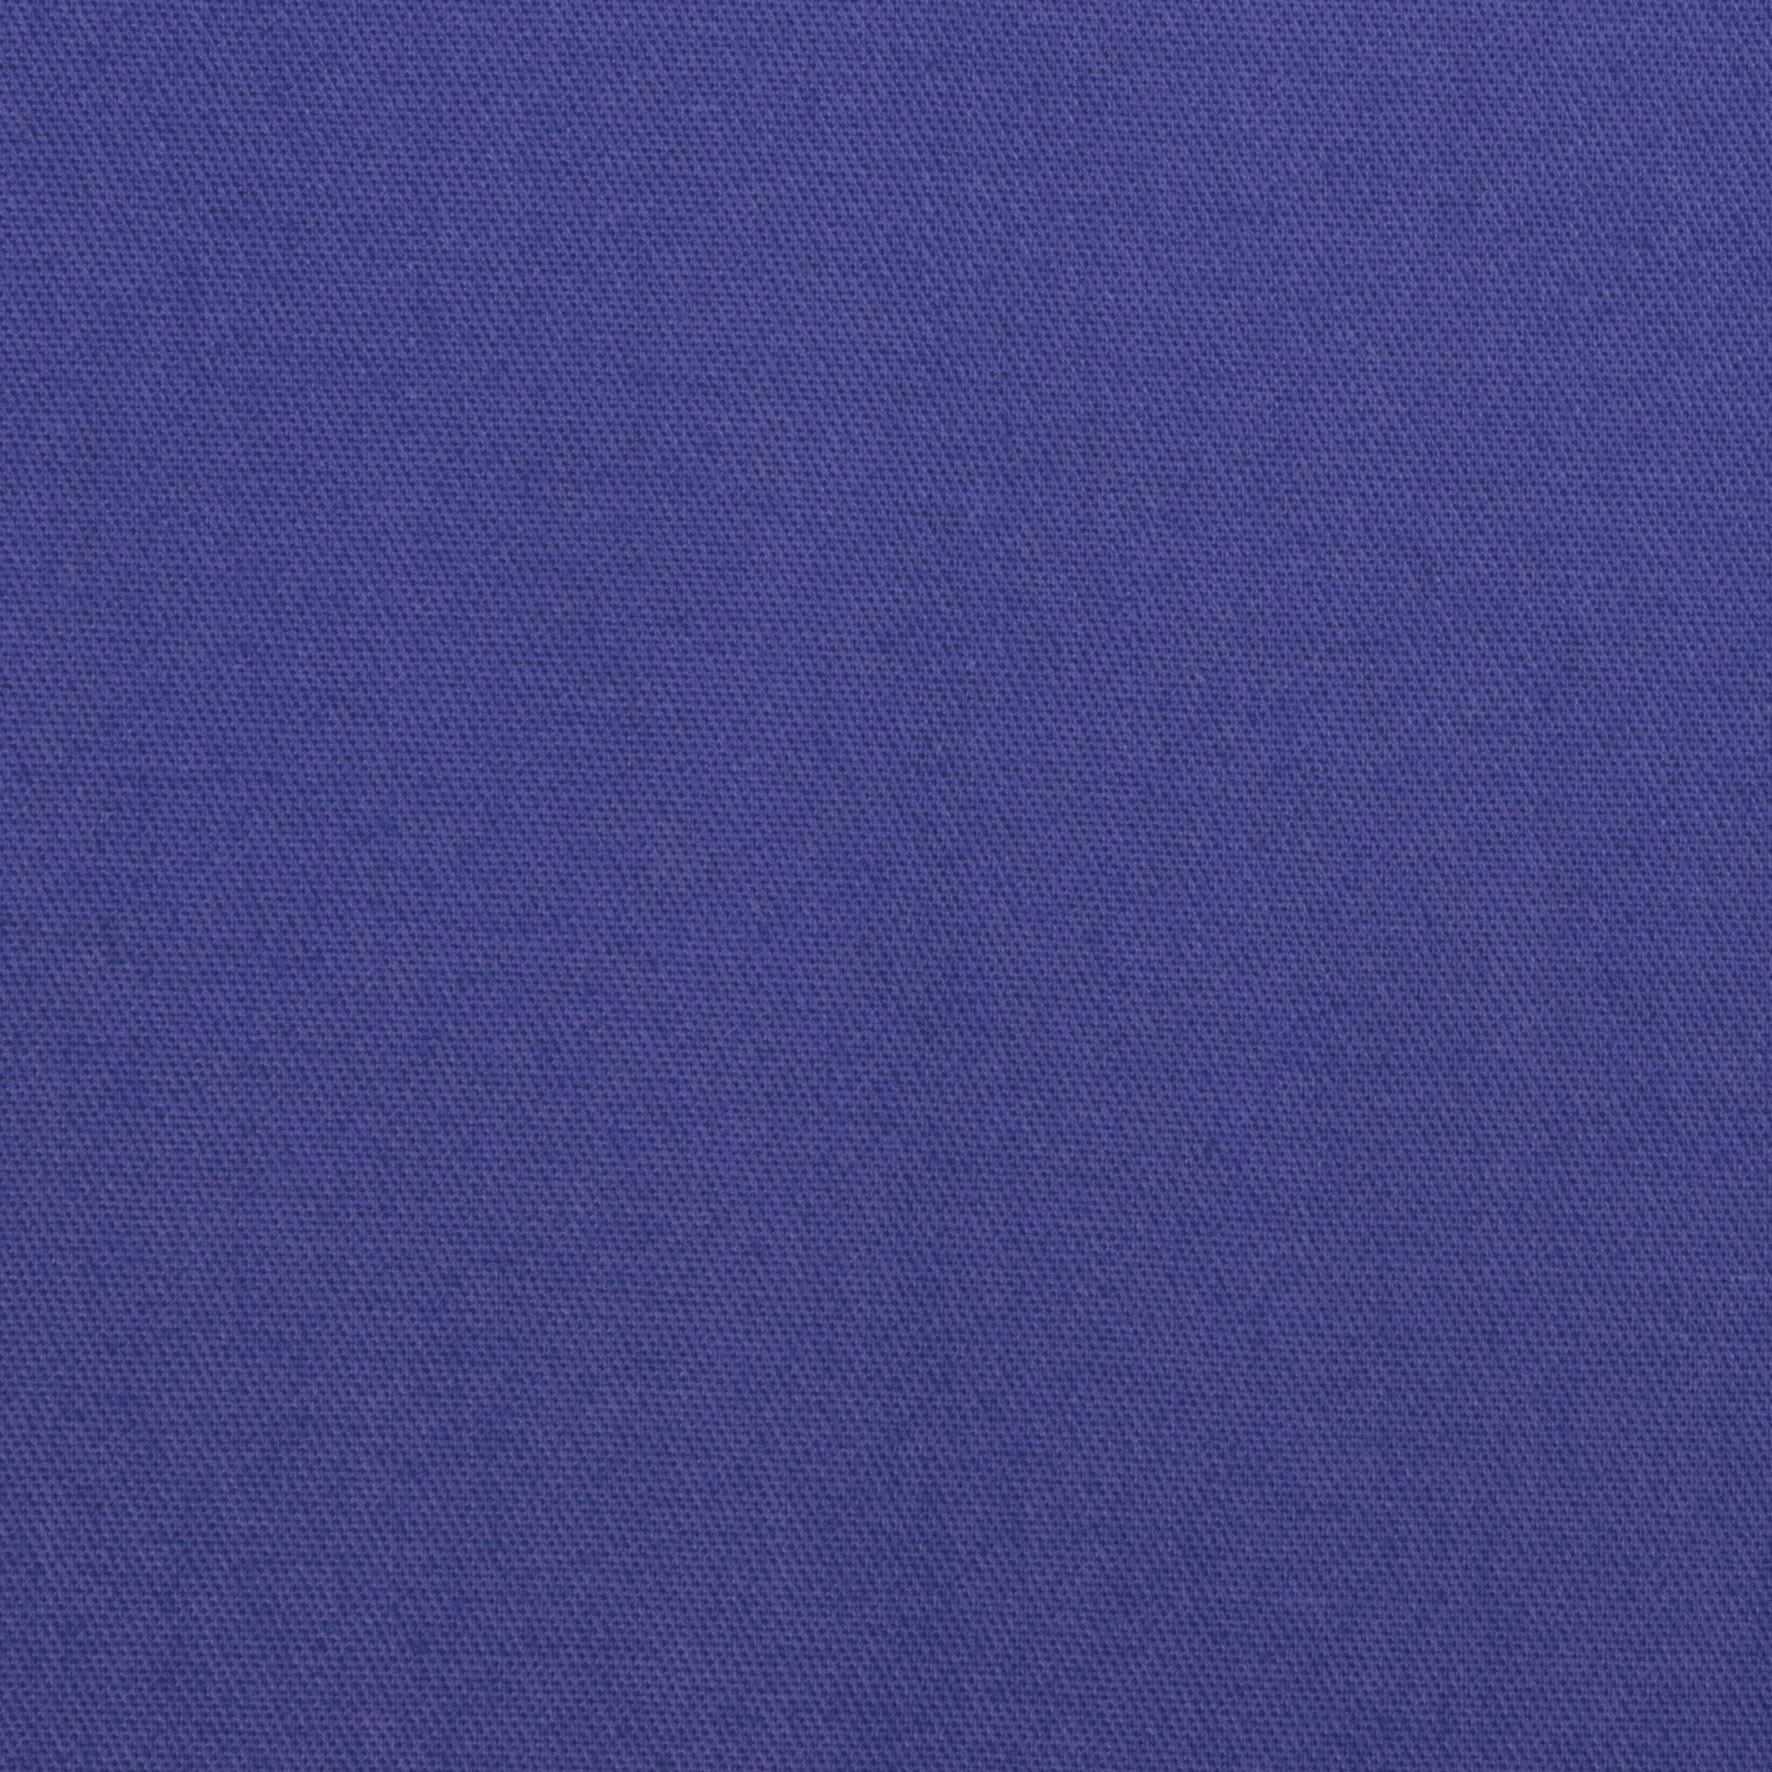 Buy tailor made shirts online - Twickenham - Mid Blue